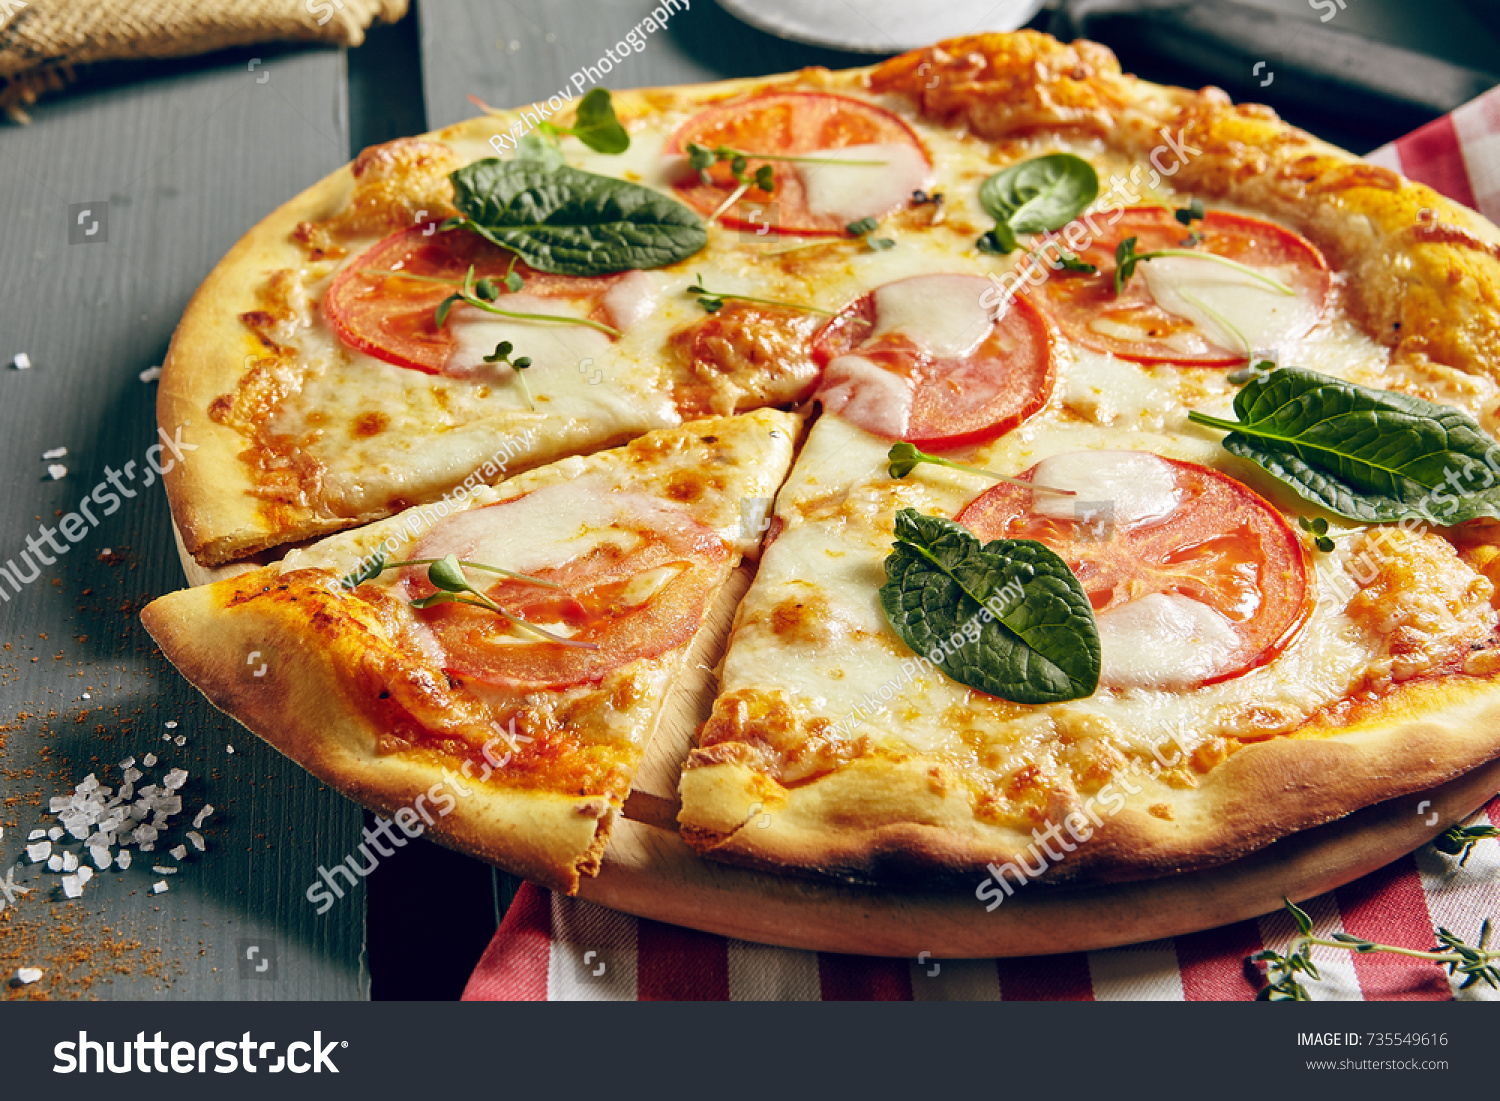 Italian Pizza Restaurant Menu - Classic Margarita Pizza. Pizza Dinner #735549616